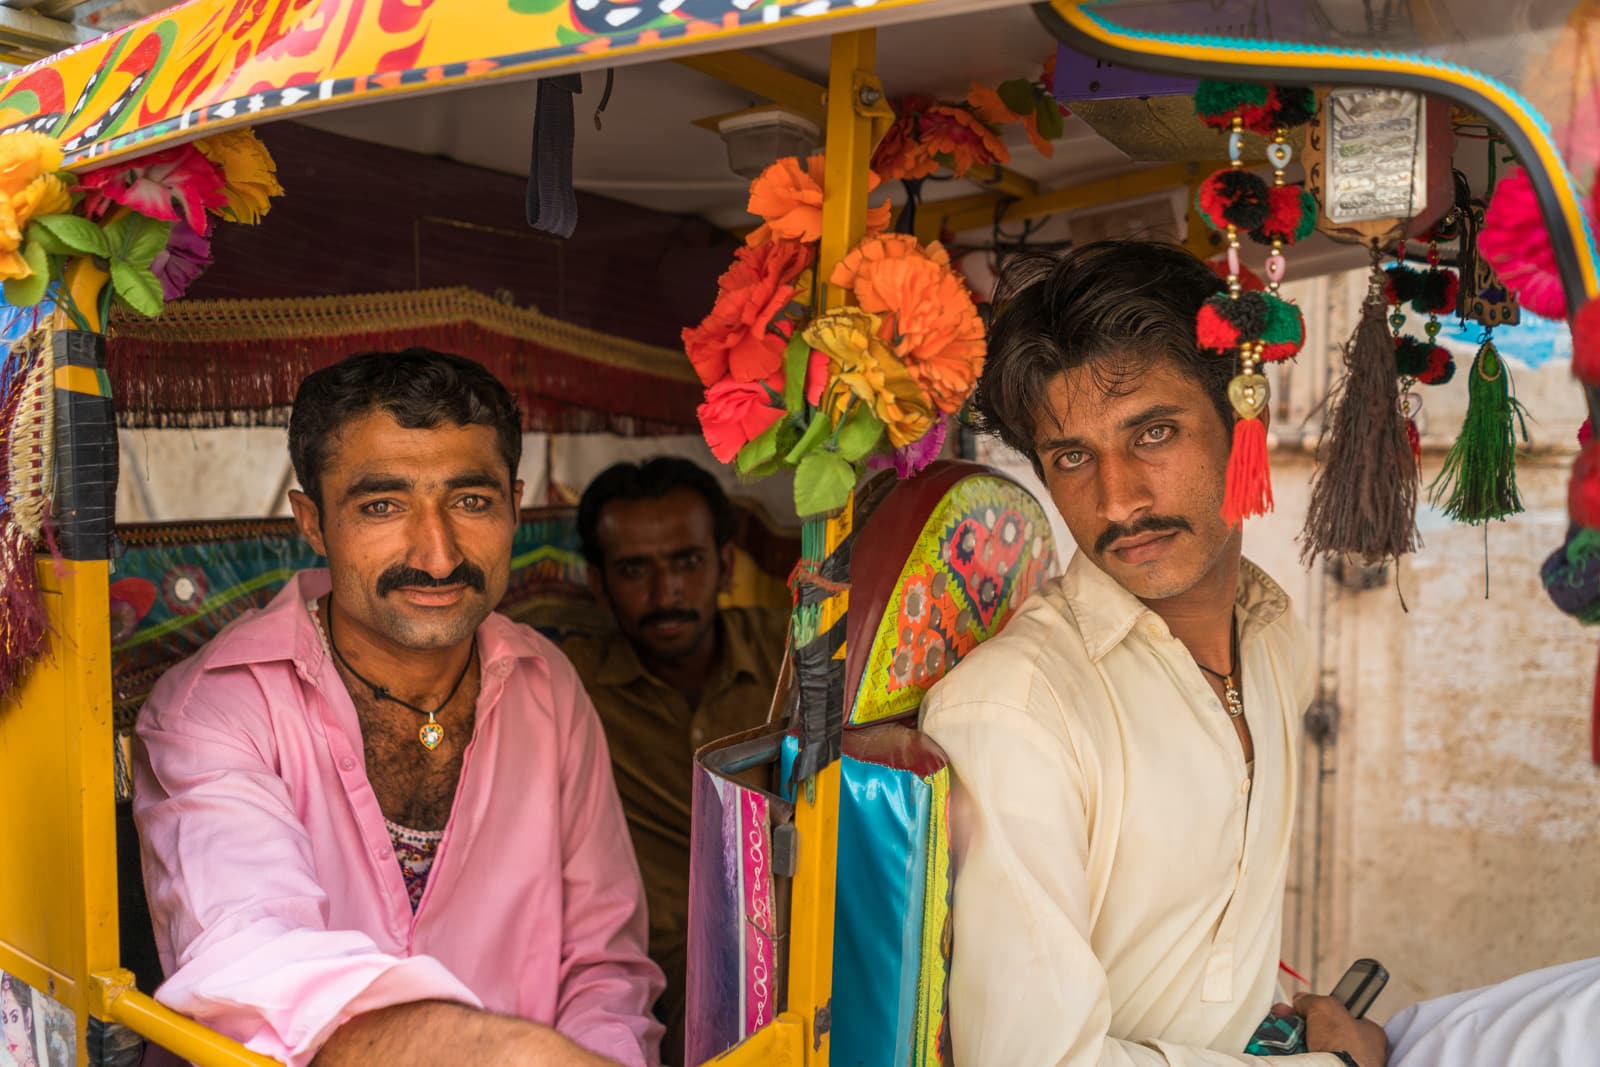 Sindh travel guide - Sindhi men staring - Lost With Purpose travel blog